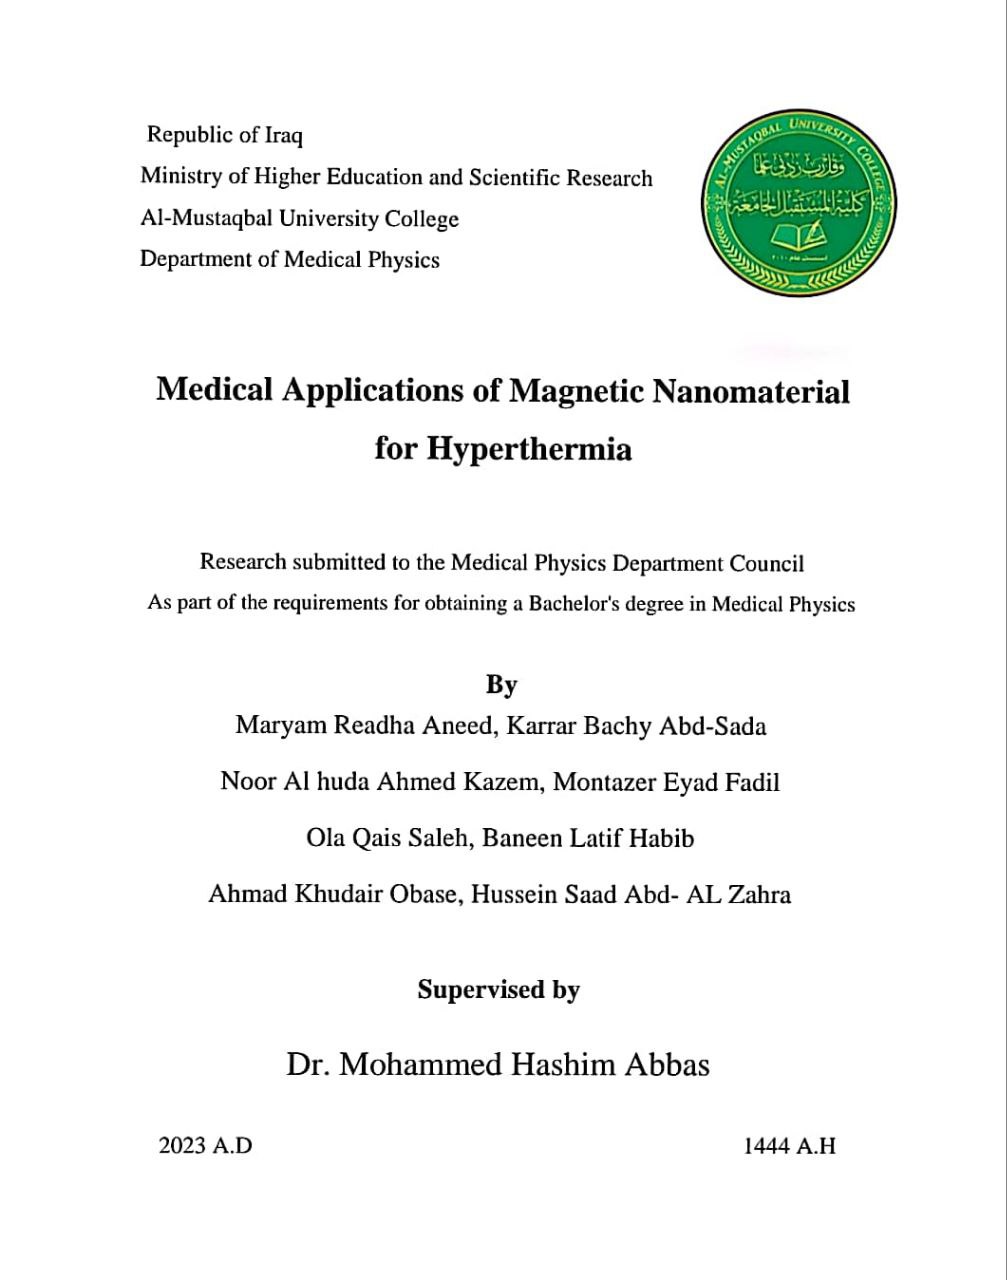 MEDICAL APPLICATIONS OF MAGNETIC NANOPAR